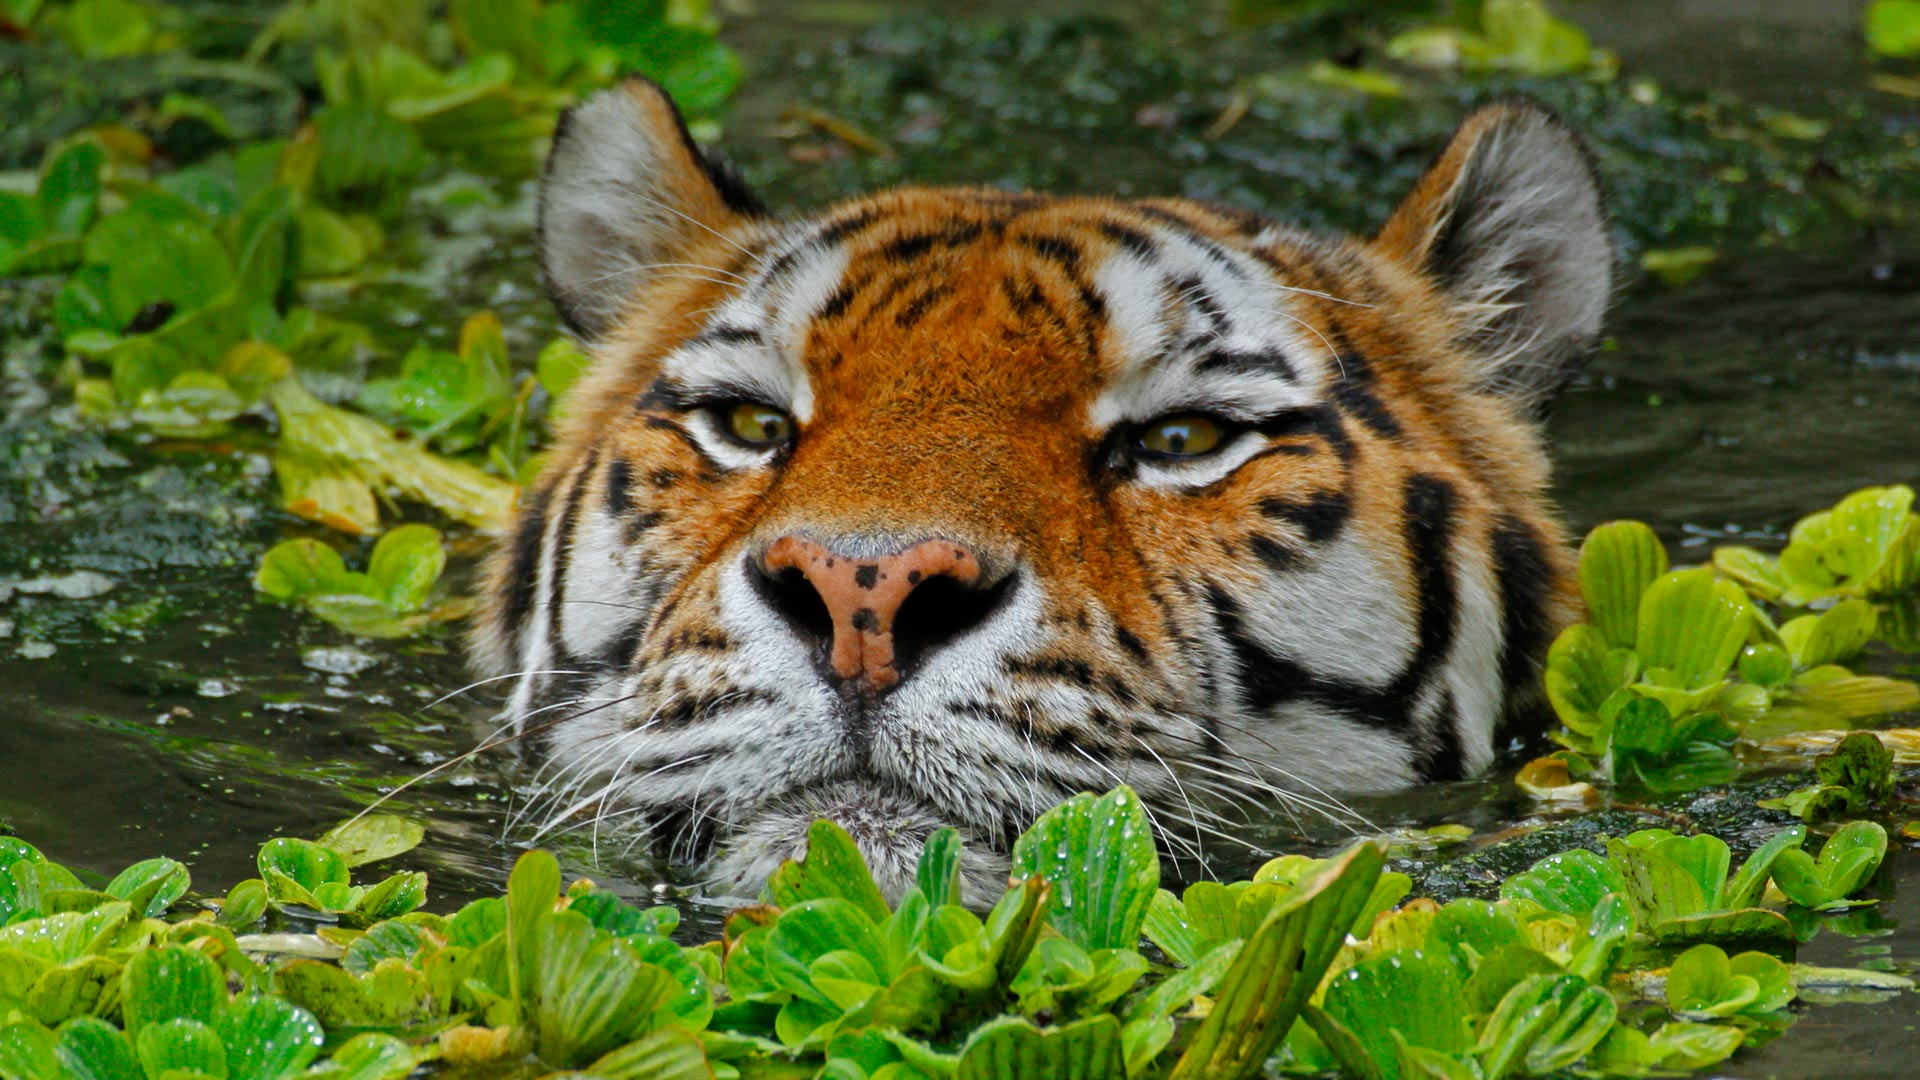 Swimming Tiger